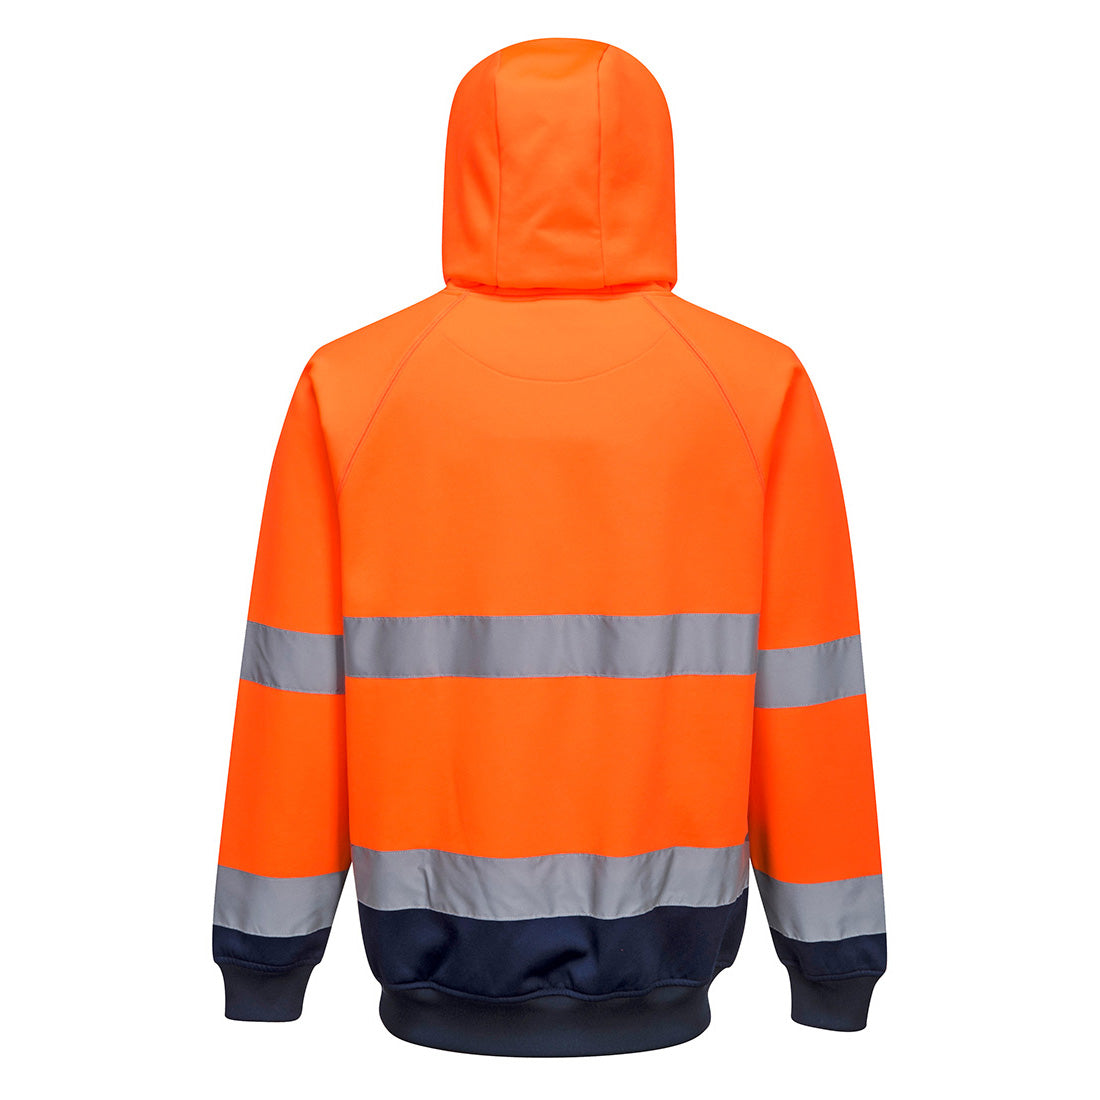 B316 - Two-Tone Hooded Sweatshirt Orange/Navy BACK